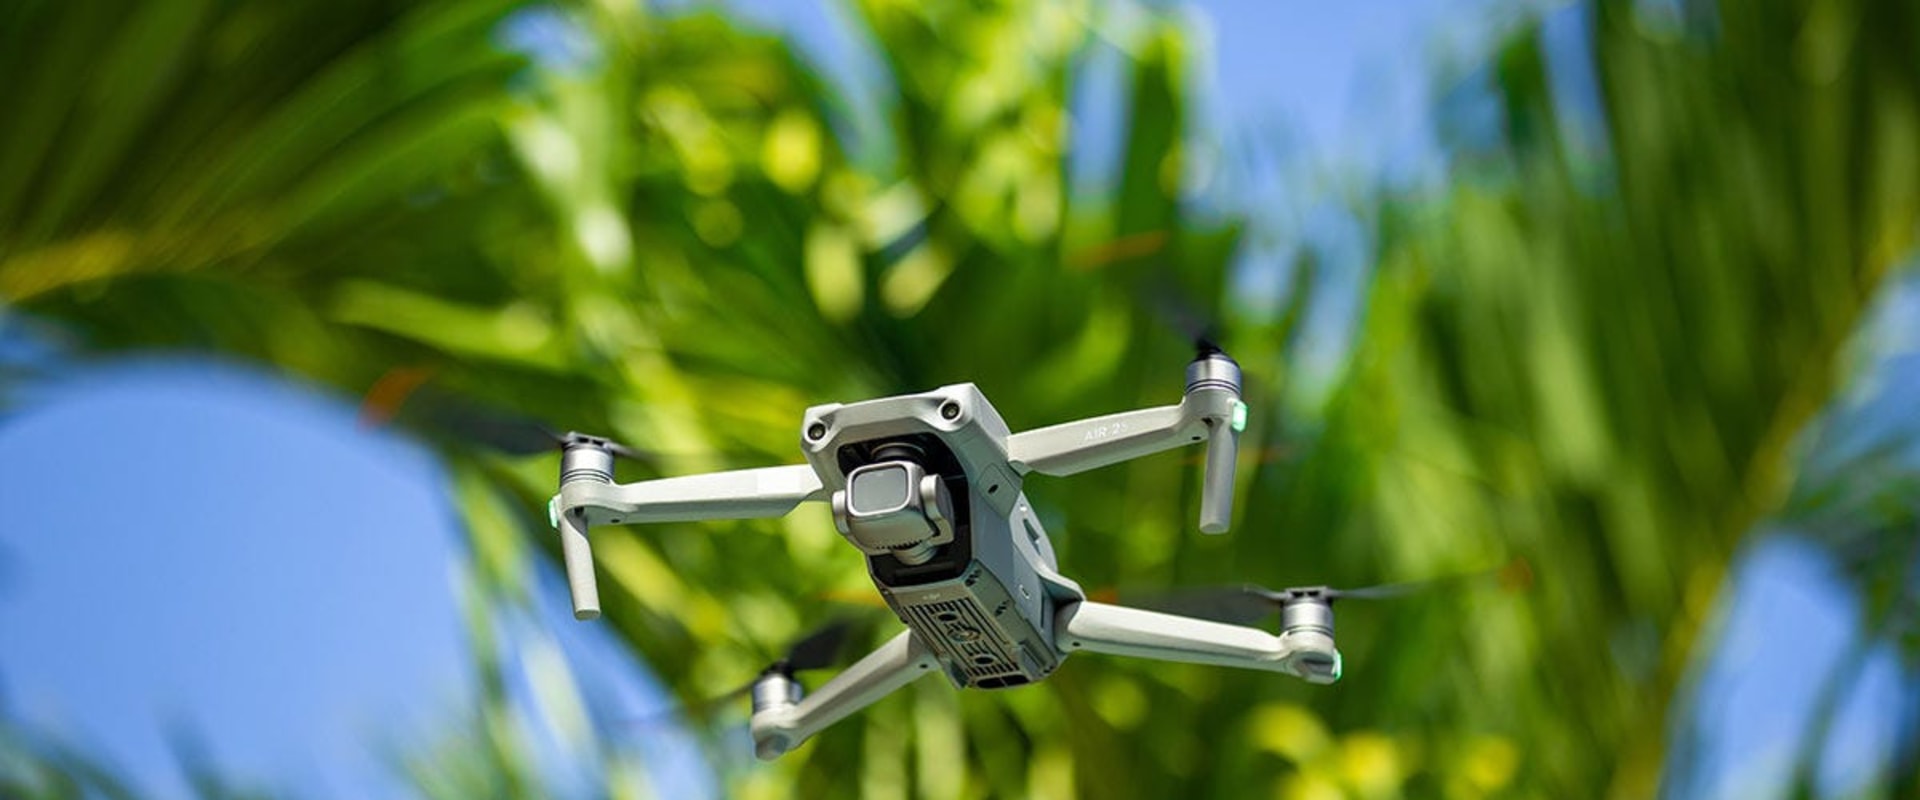 What is the longest dji drone flight time?